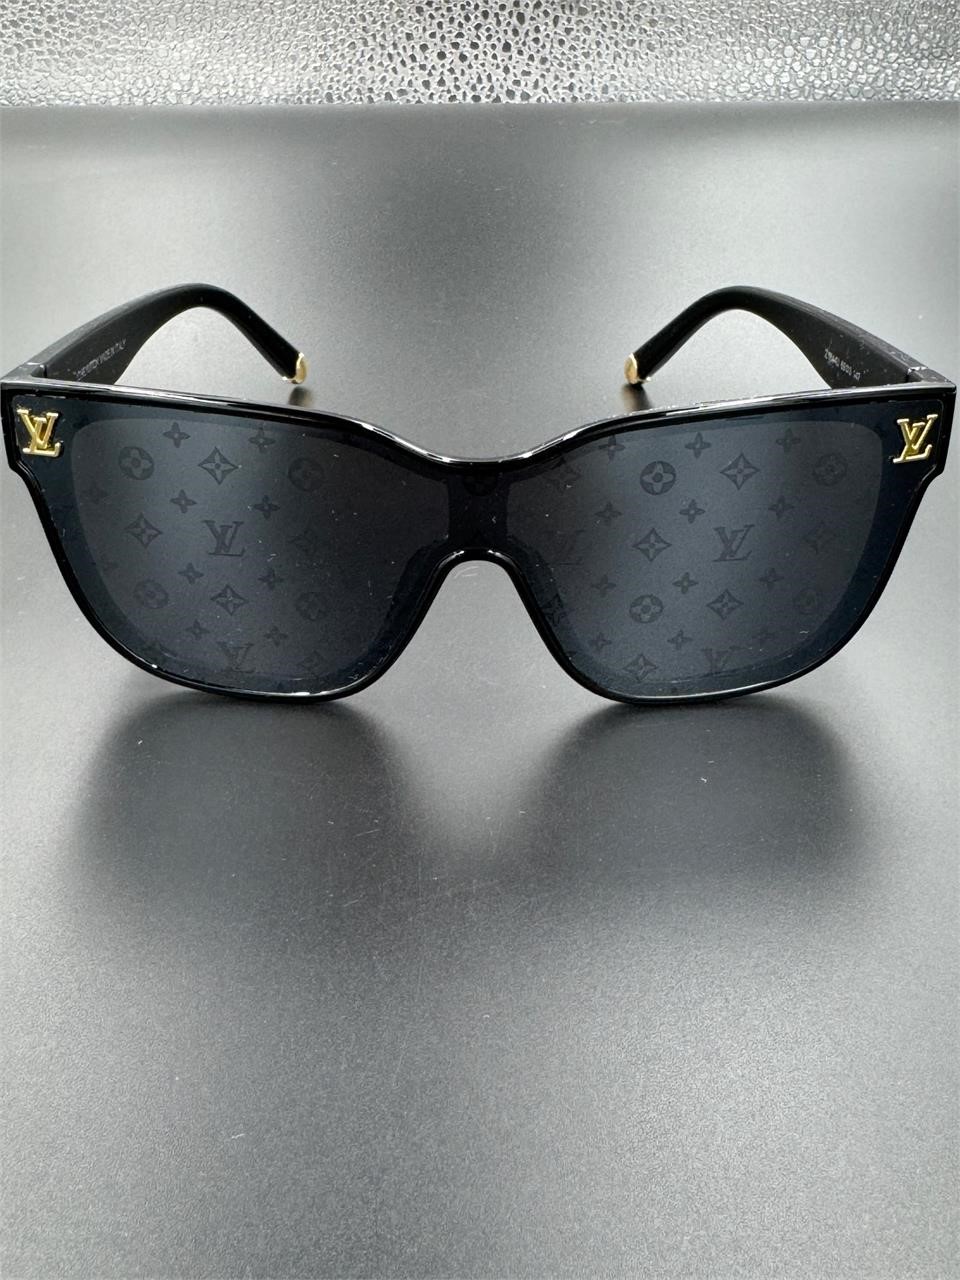 Louis Vuitton Luxury Sunglasses